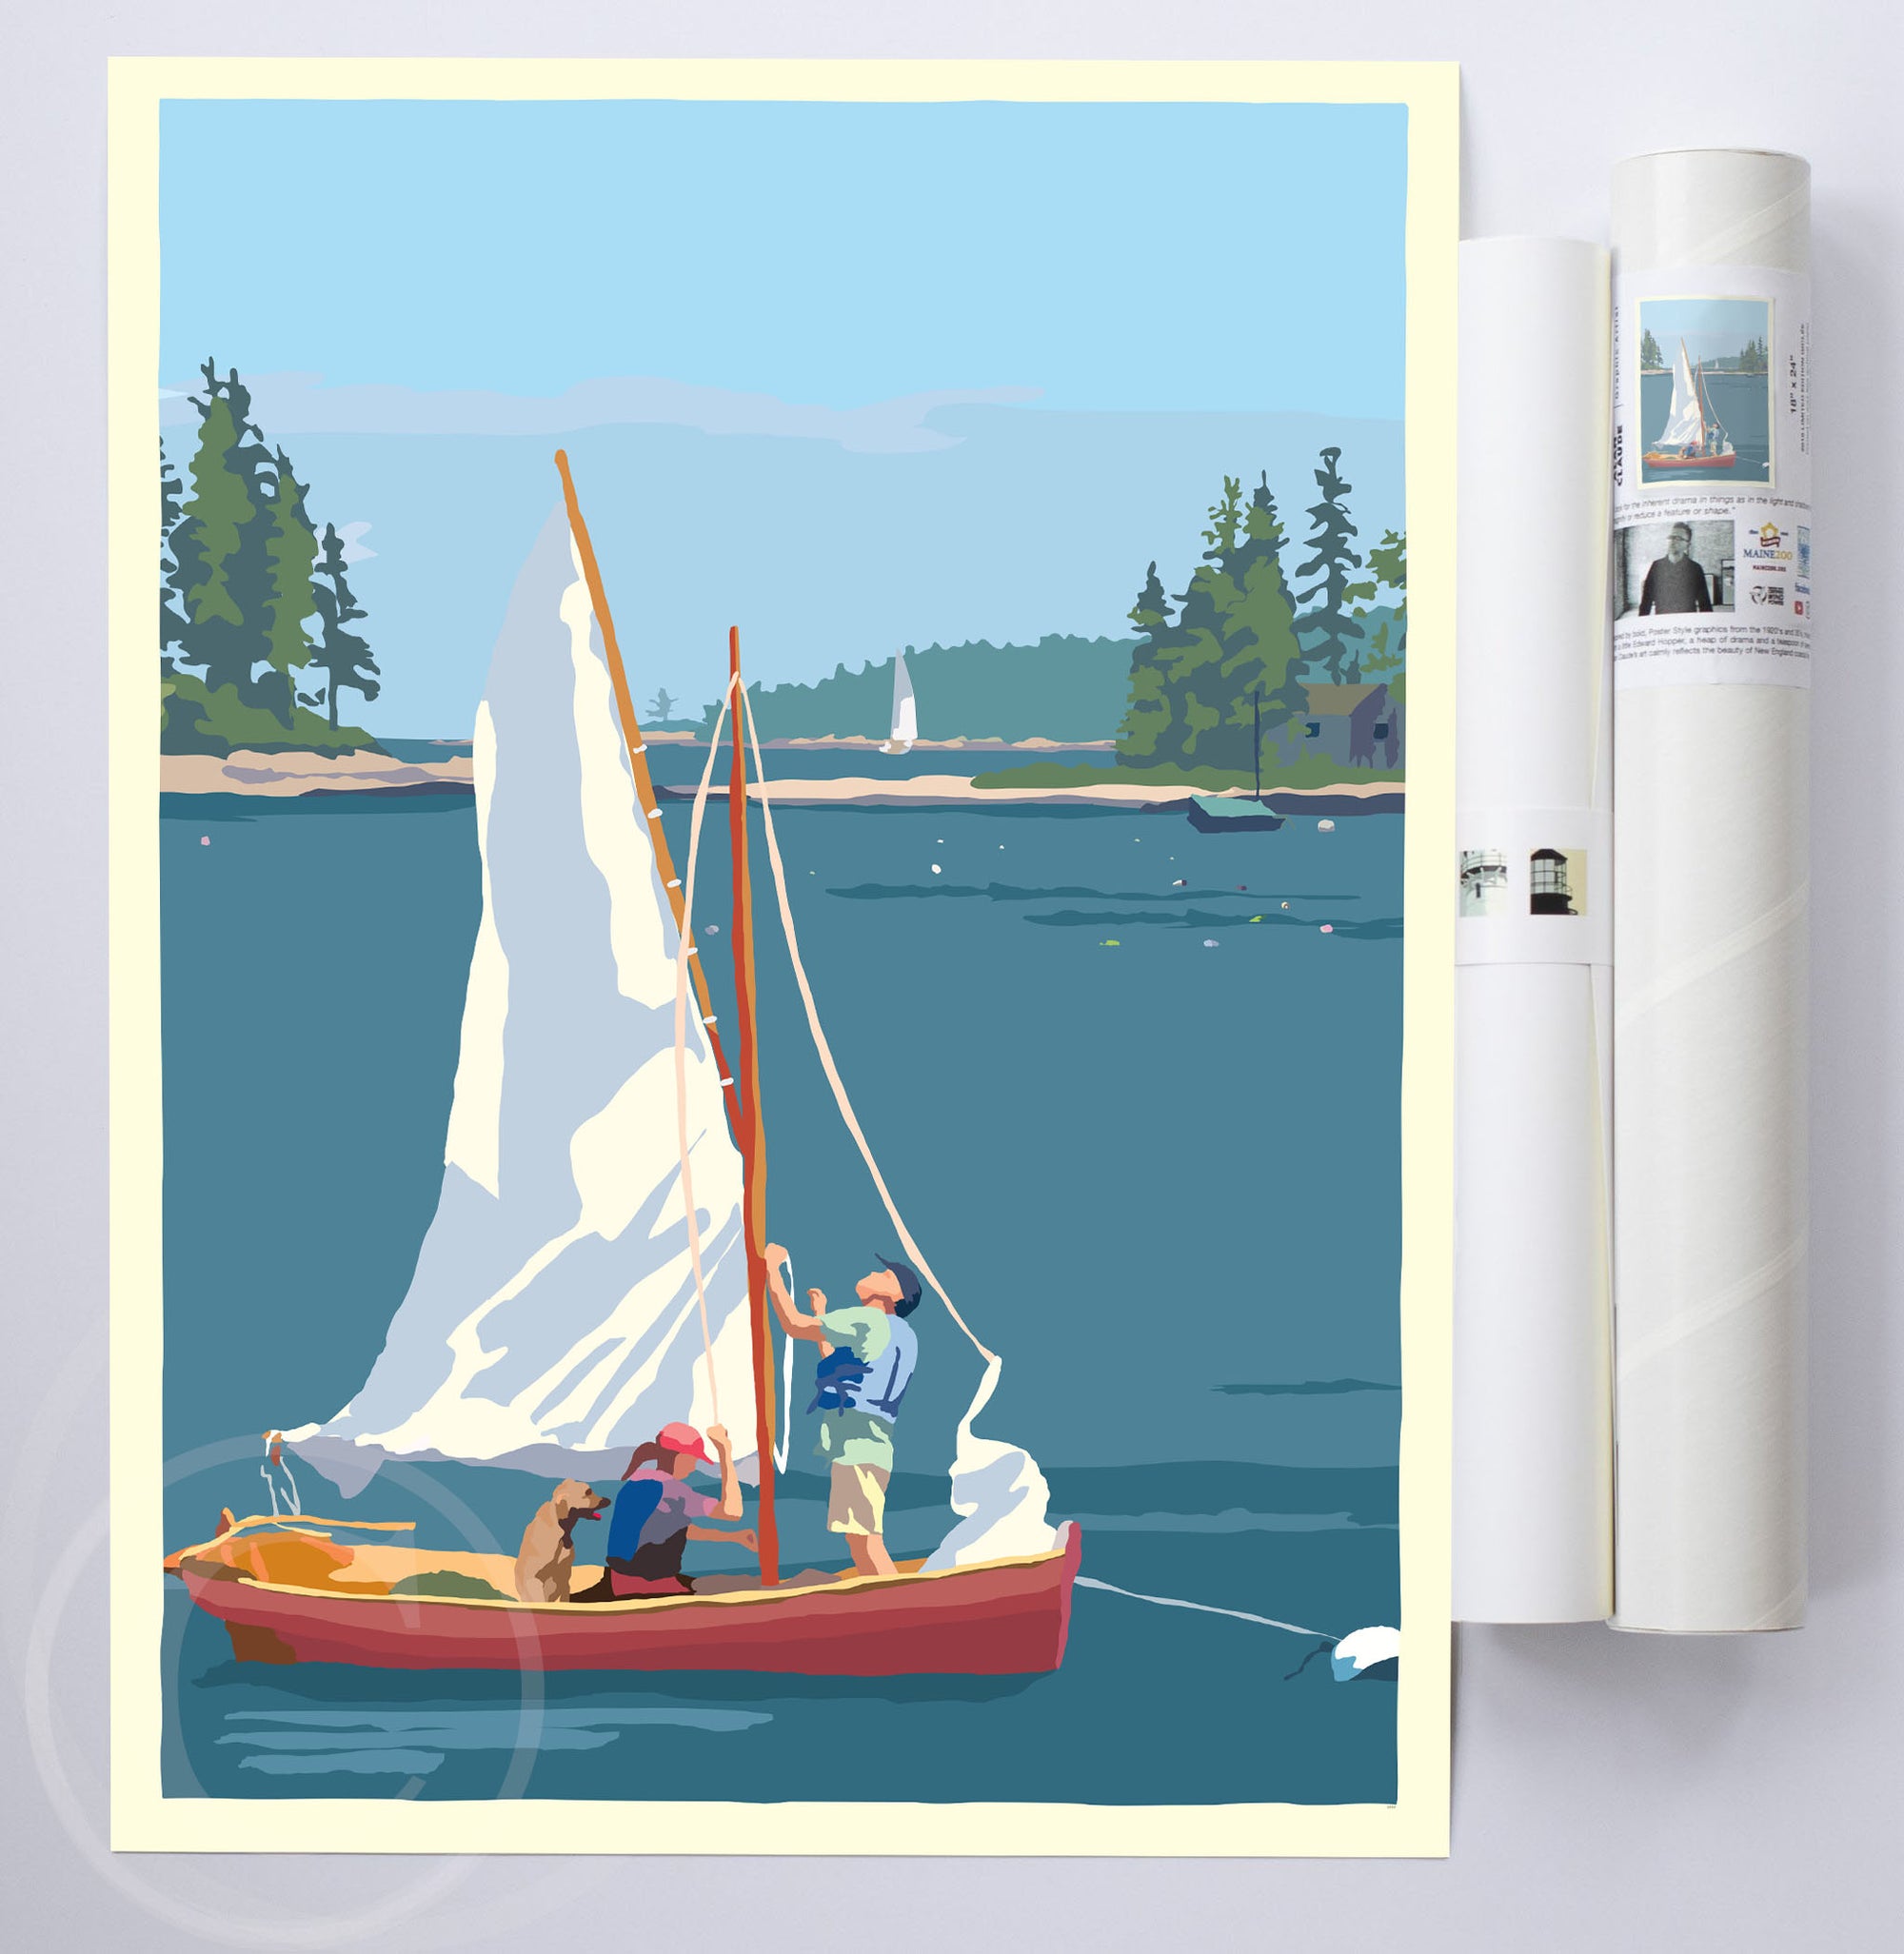 Hoist The Sail Art Print 18" x 24" Wall Poster By Alan Claude - Maine